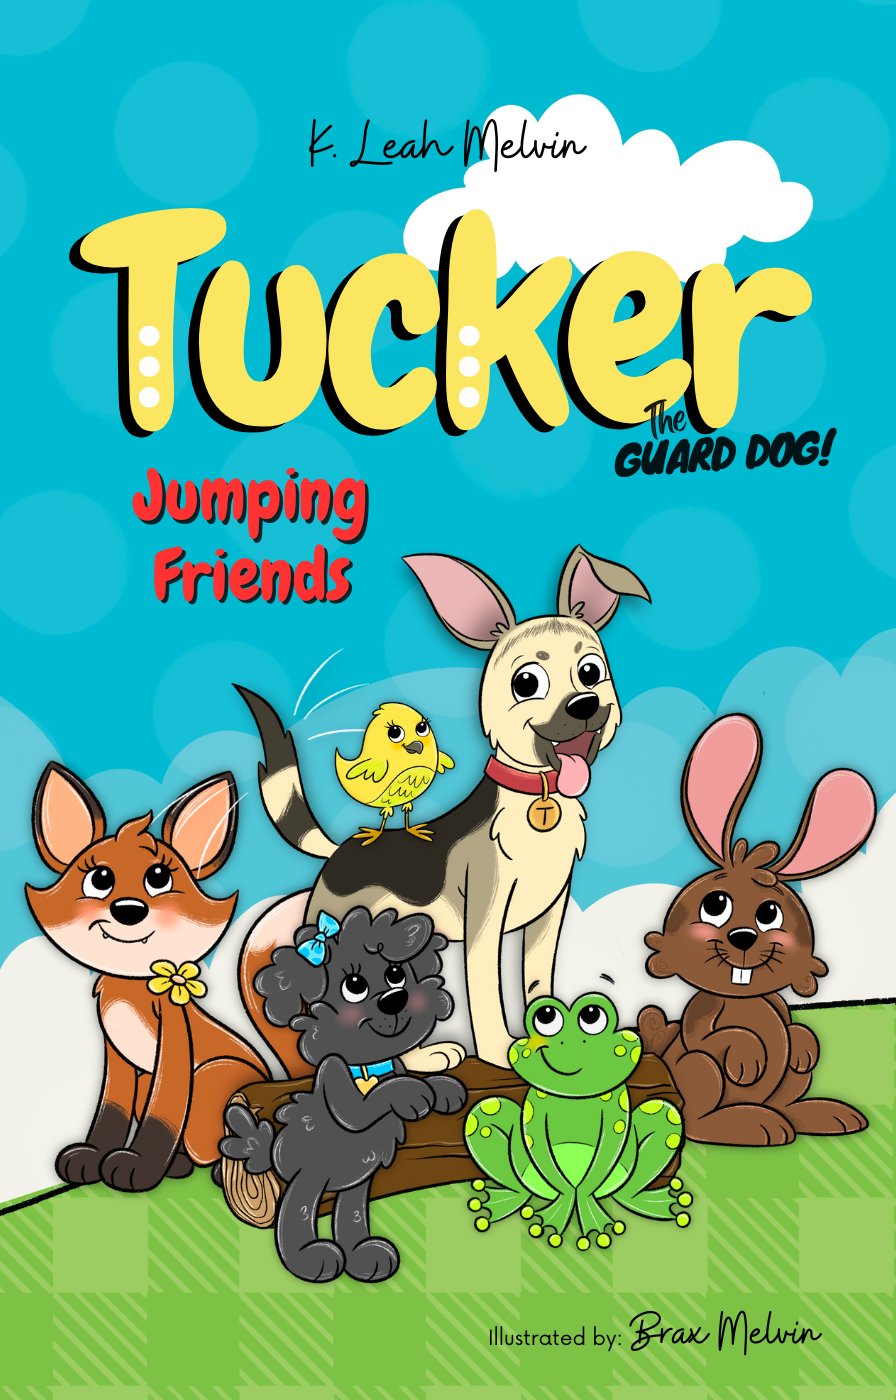 TUCKER THE GUARD DOG: JUMPING FRIENDS